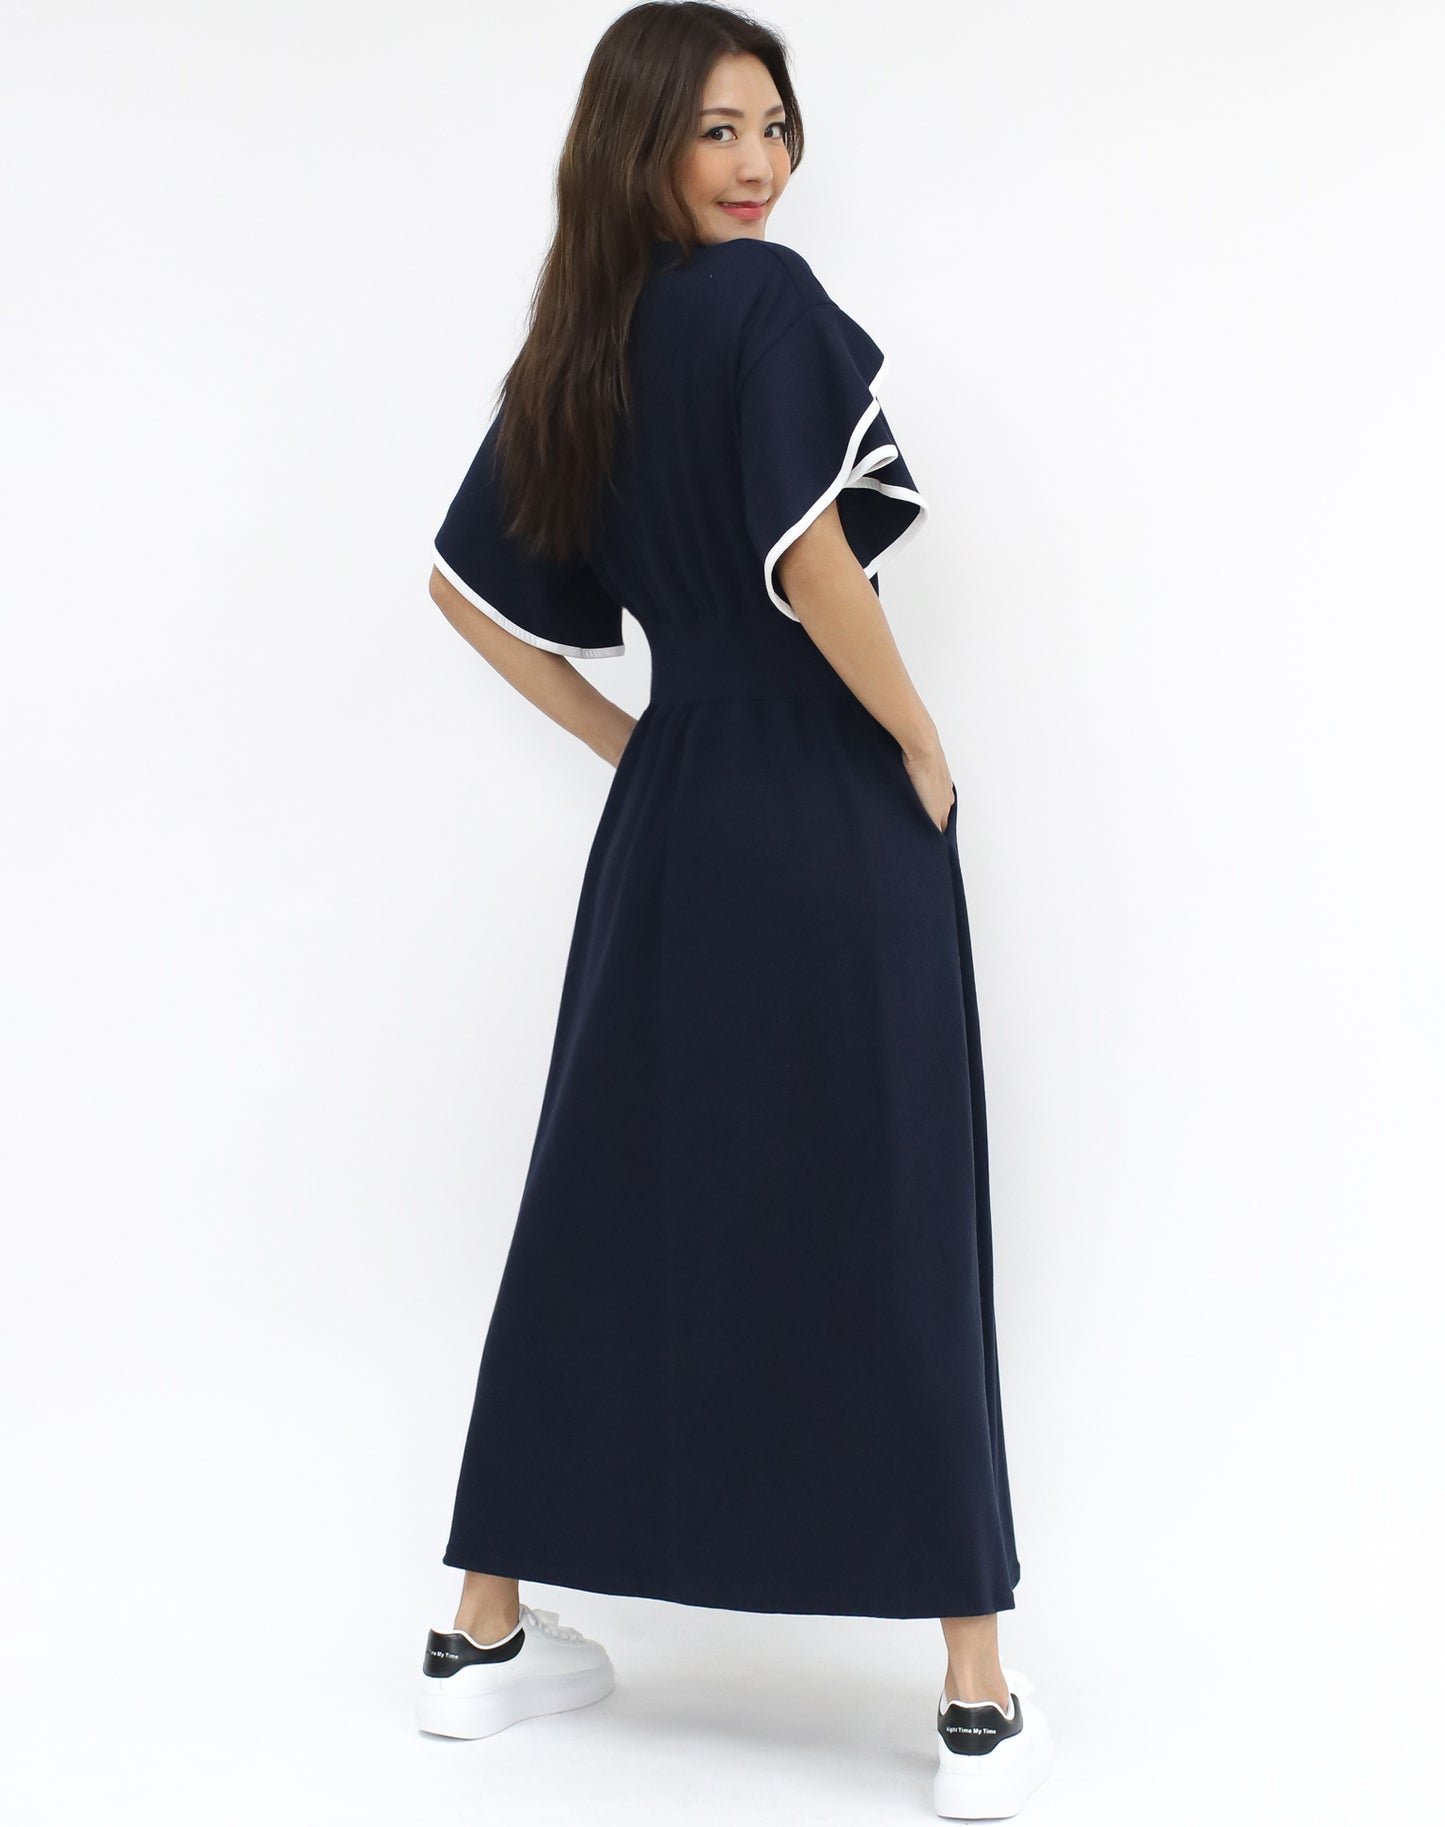 navy & ivory trim ruffles layers sleeves longline dress *pre-order*